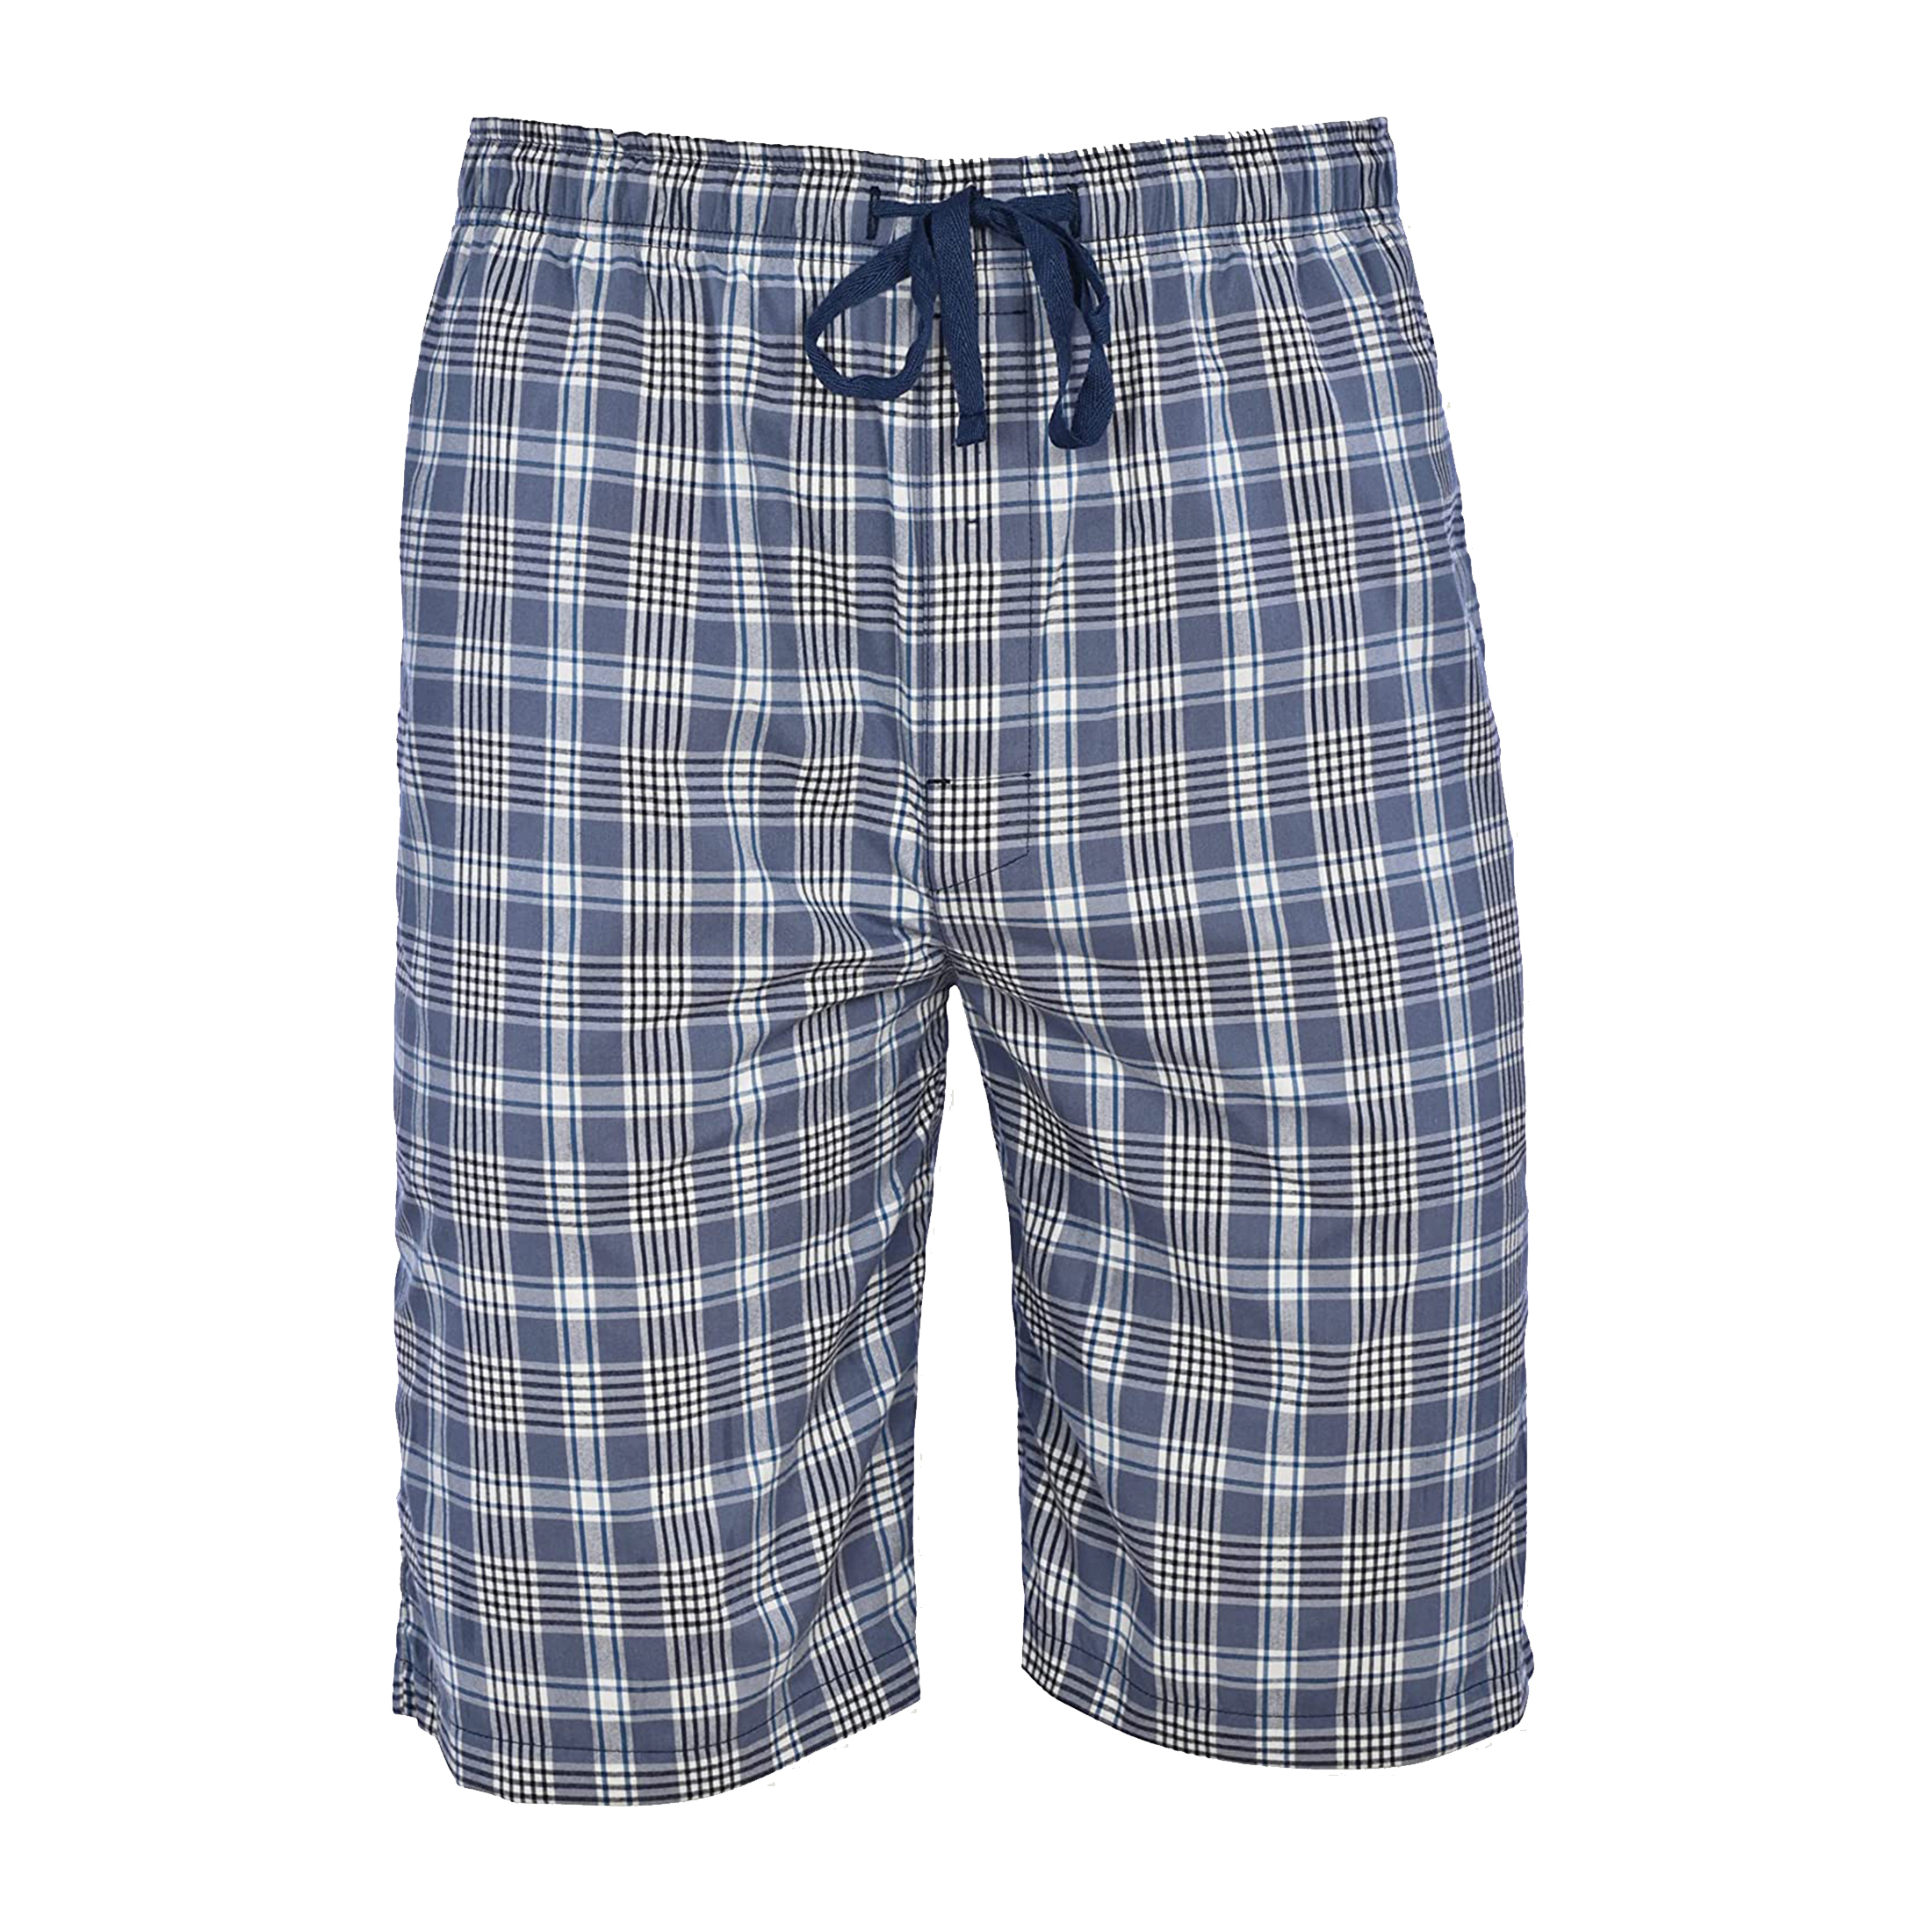 Multi-Pack: Men's Ultra-Soft Jersey Knit Sleep Lounge Pajama Shorts For Sleepwear - Plaid, 1 Pack, Large